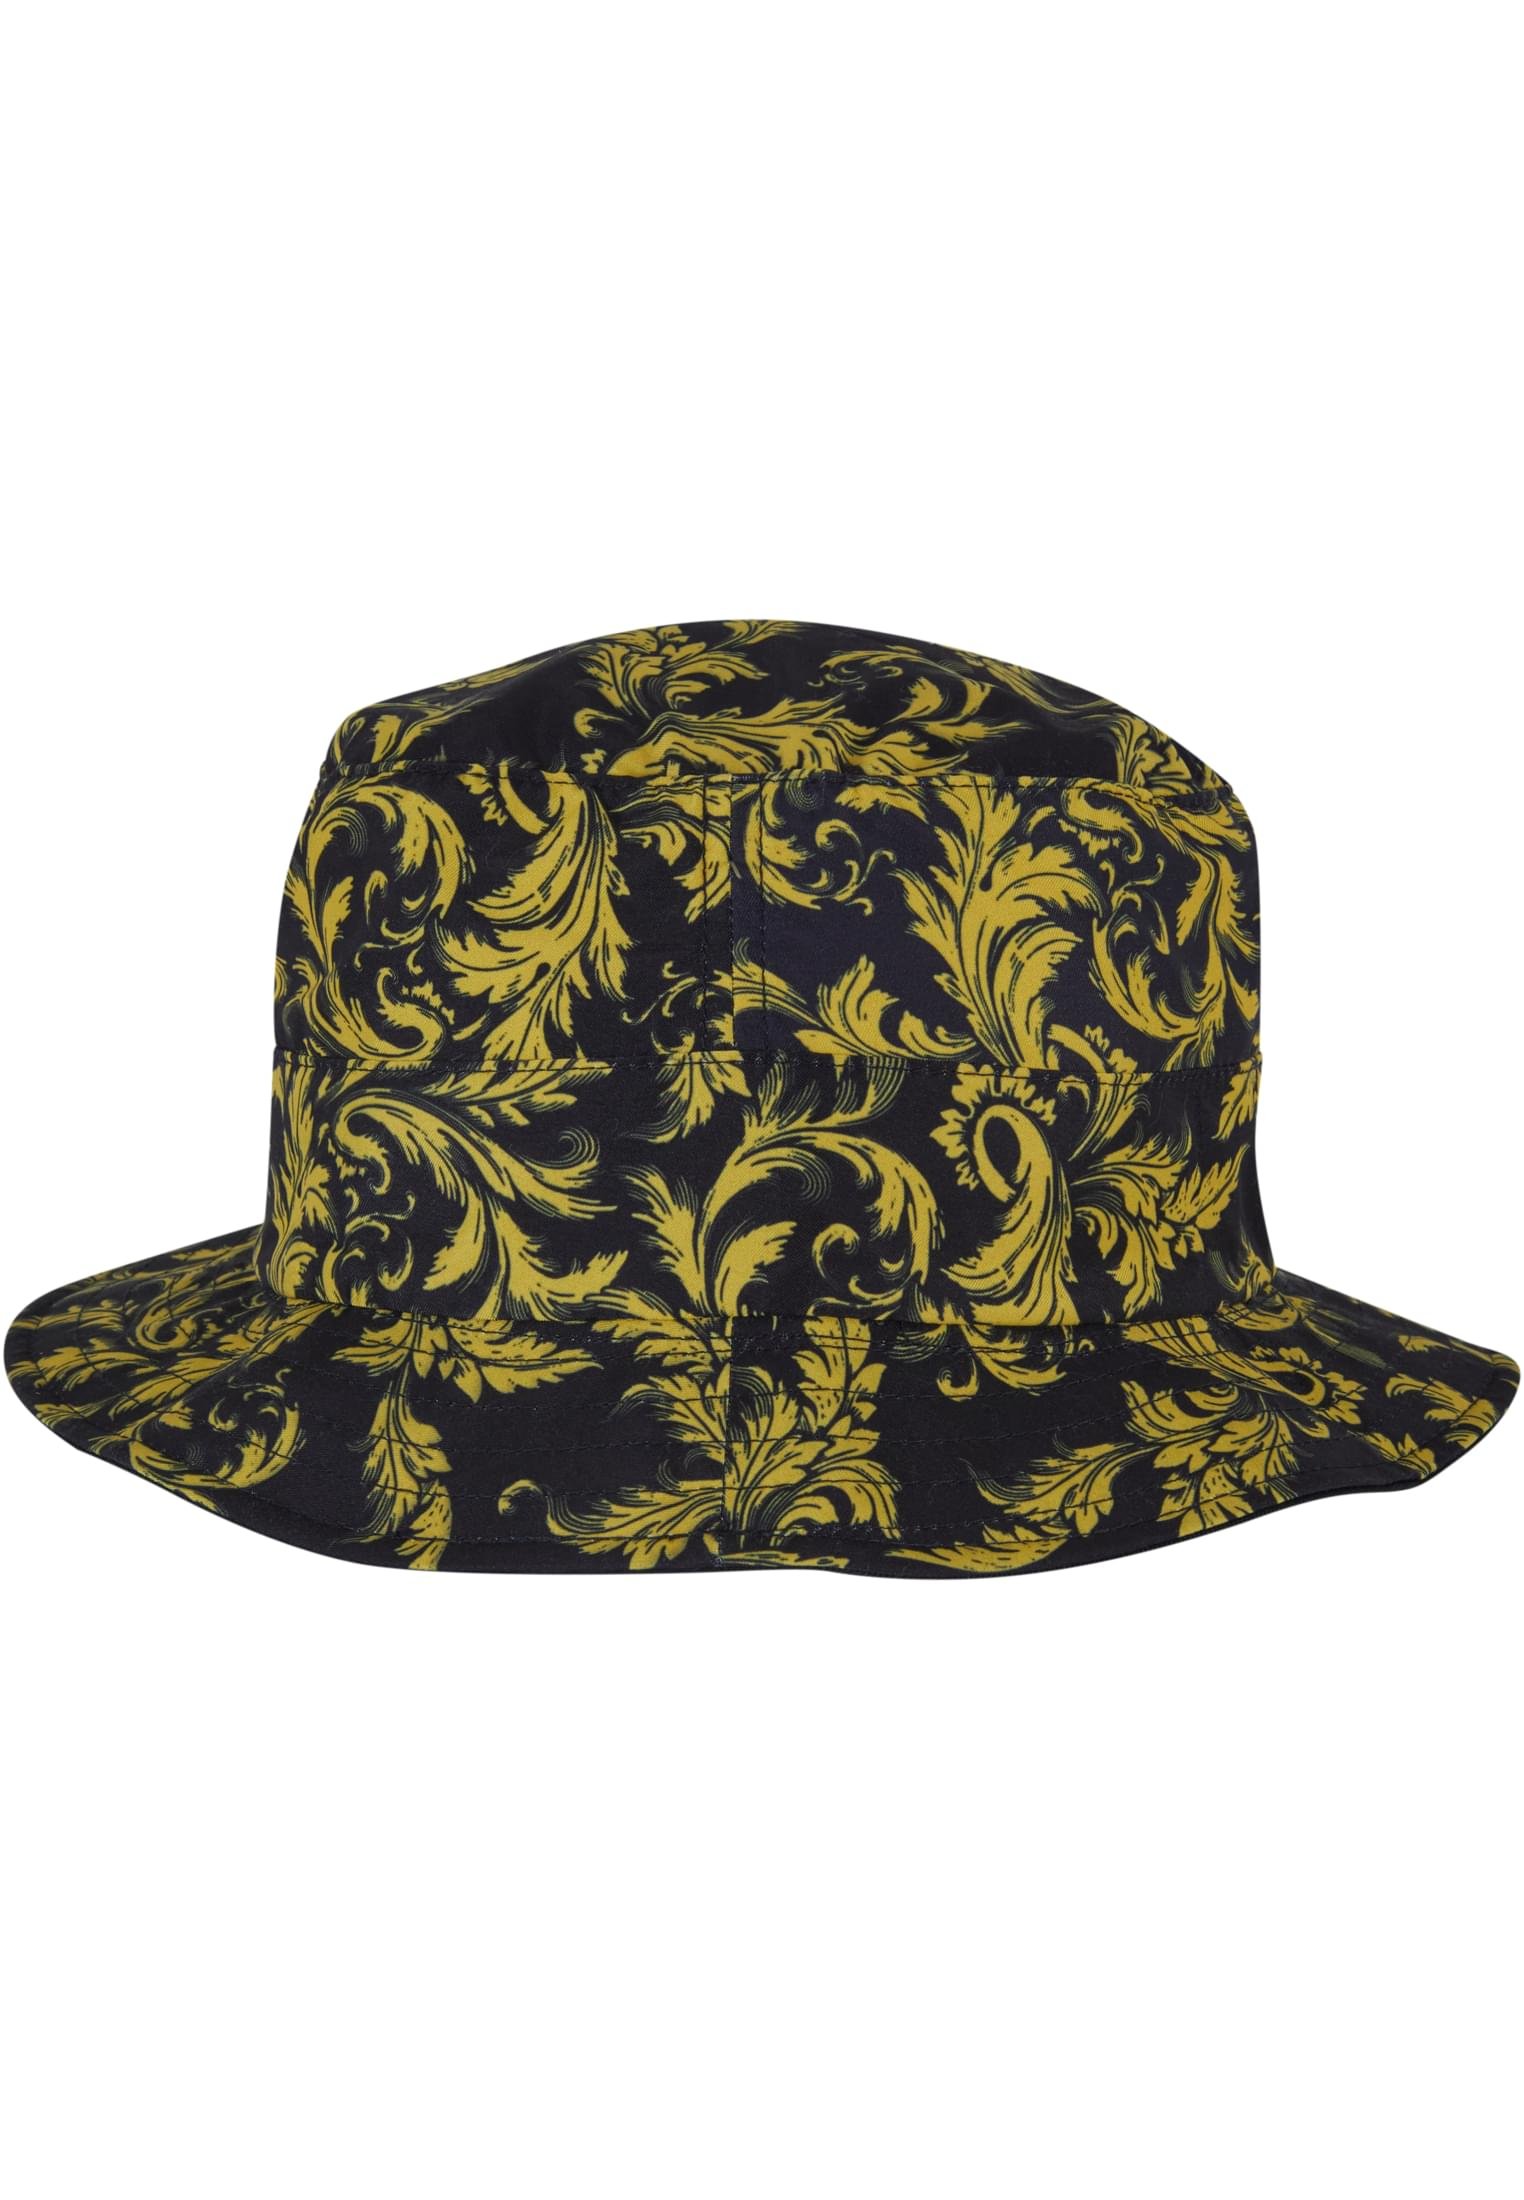 C&S WL Royal Leaves Bucket Hat black/mc one size